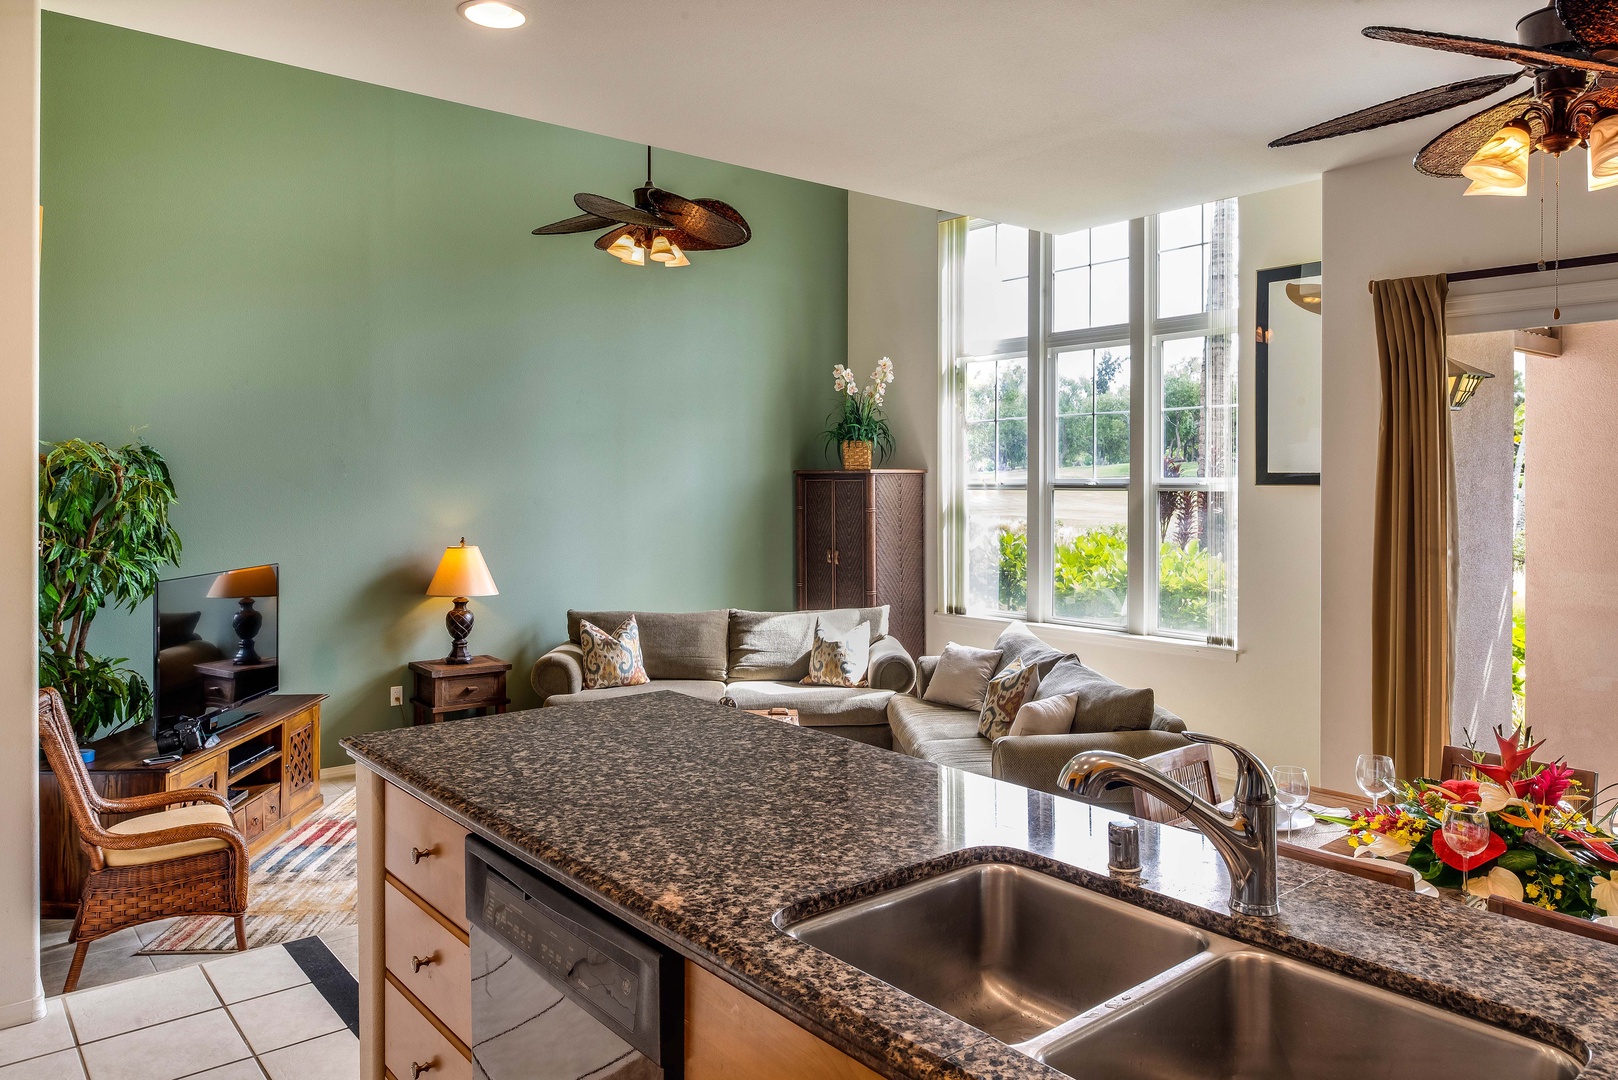 Waikoloa Vacation Rentals, Waikoloa Colony Villas 403 - Open Floorpan View From Kitchen into Living Room